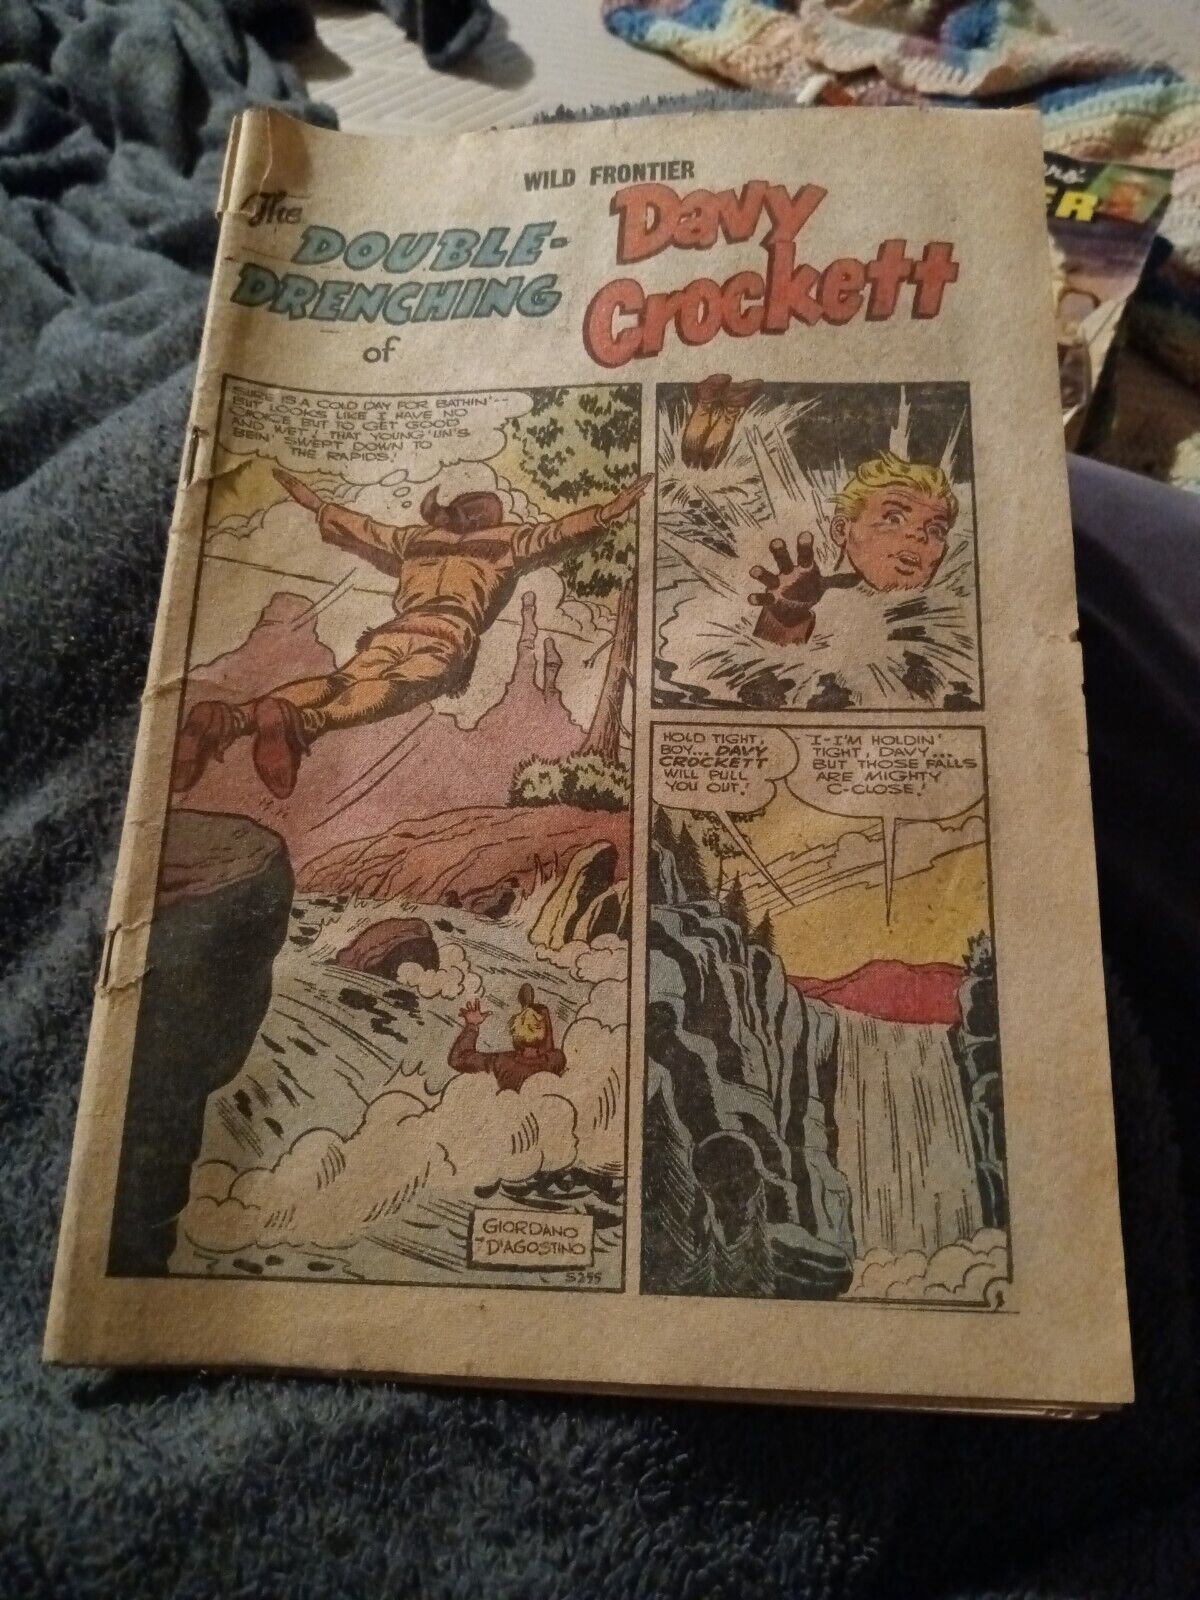 1954 Wild Frontier #3 CHARLTON COMICS BOOK-Western Davy Crockett golden age book